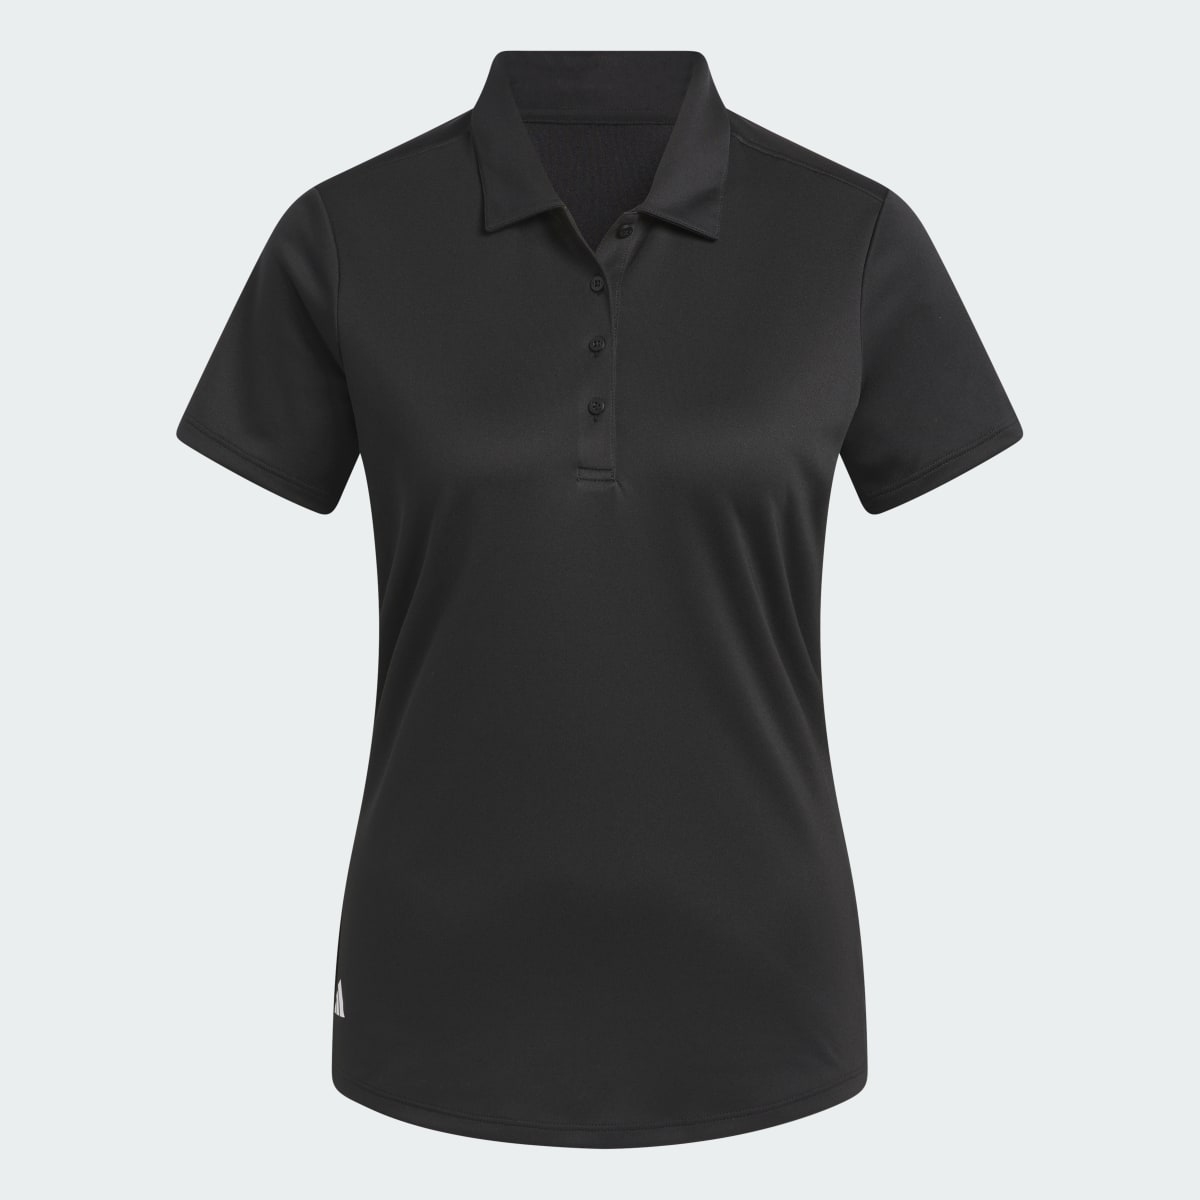 Adidas Koszulka polo Women's Solid Performance Short Sleeve. 5